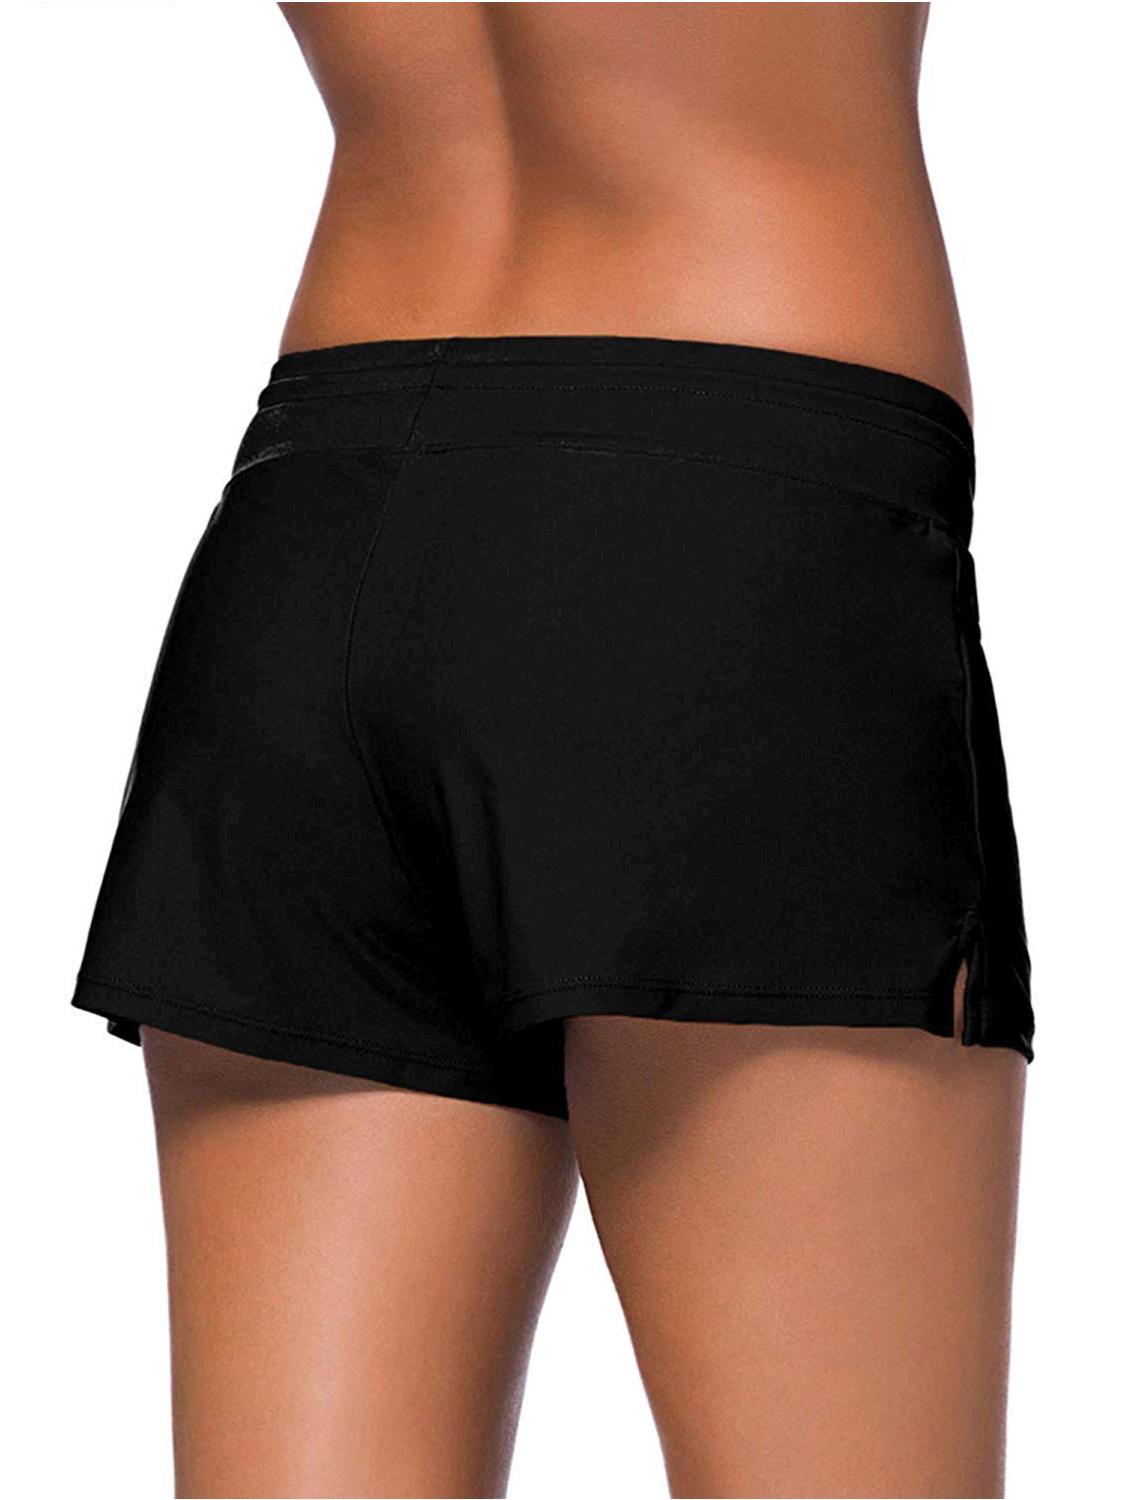 Satinior Women Swimsuit Shorts Tankini Swim Briefs Plus Black 2 Size 